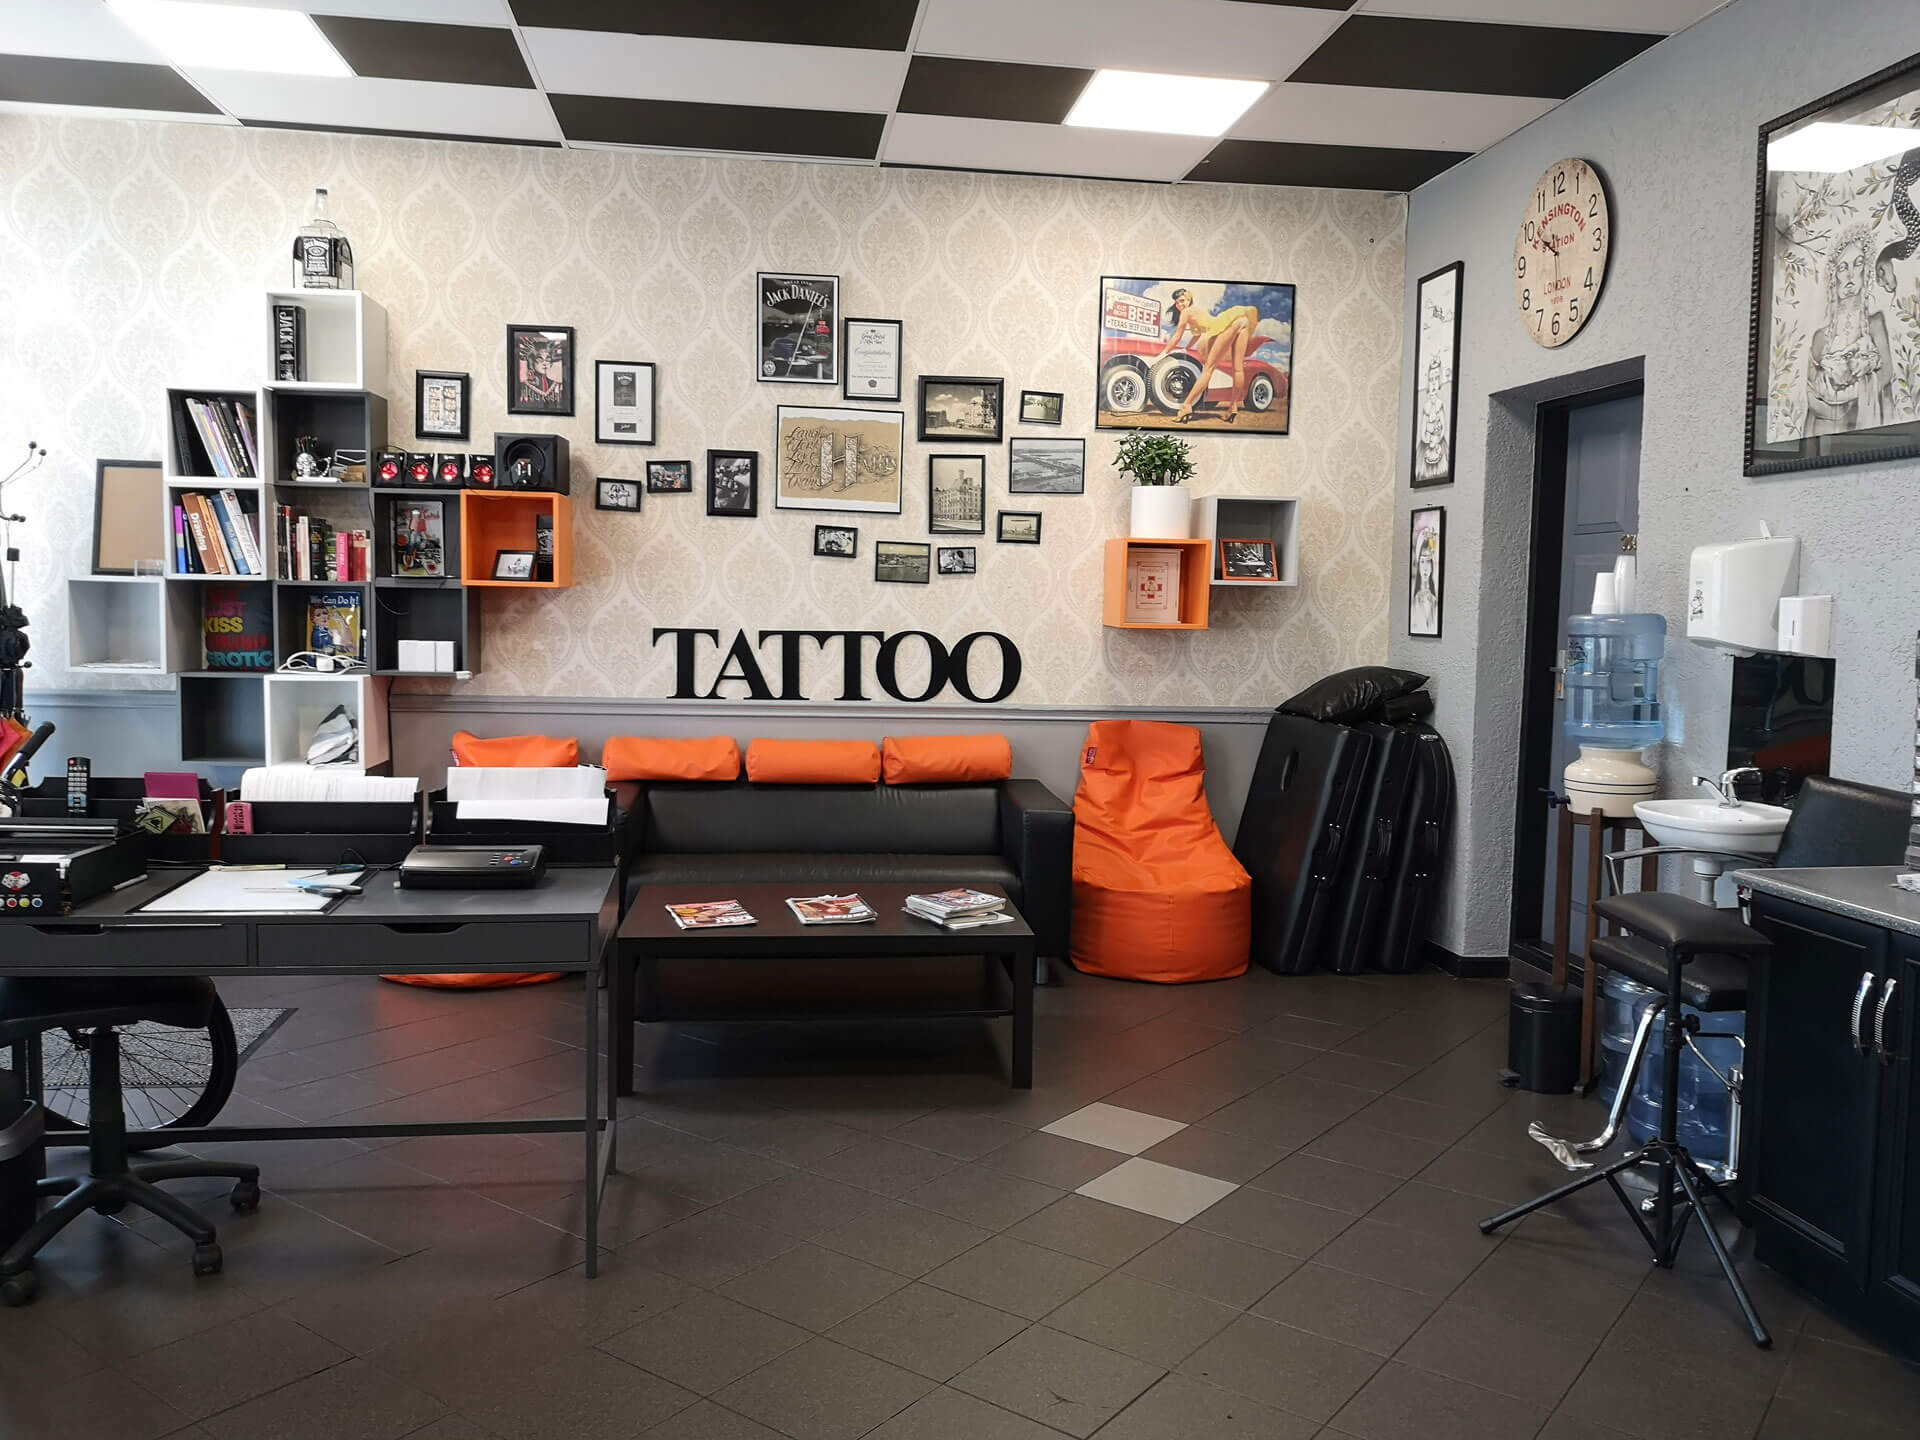 tattoo shops interior